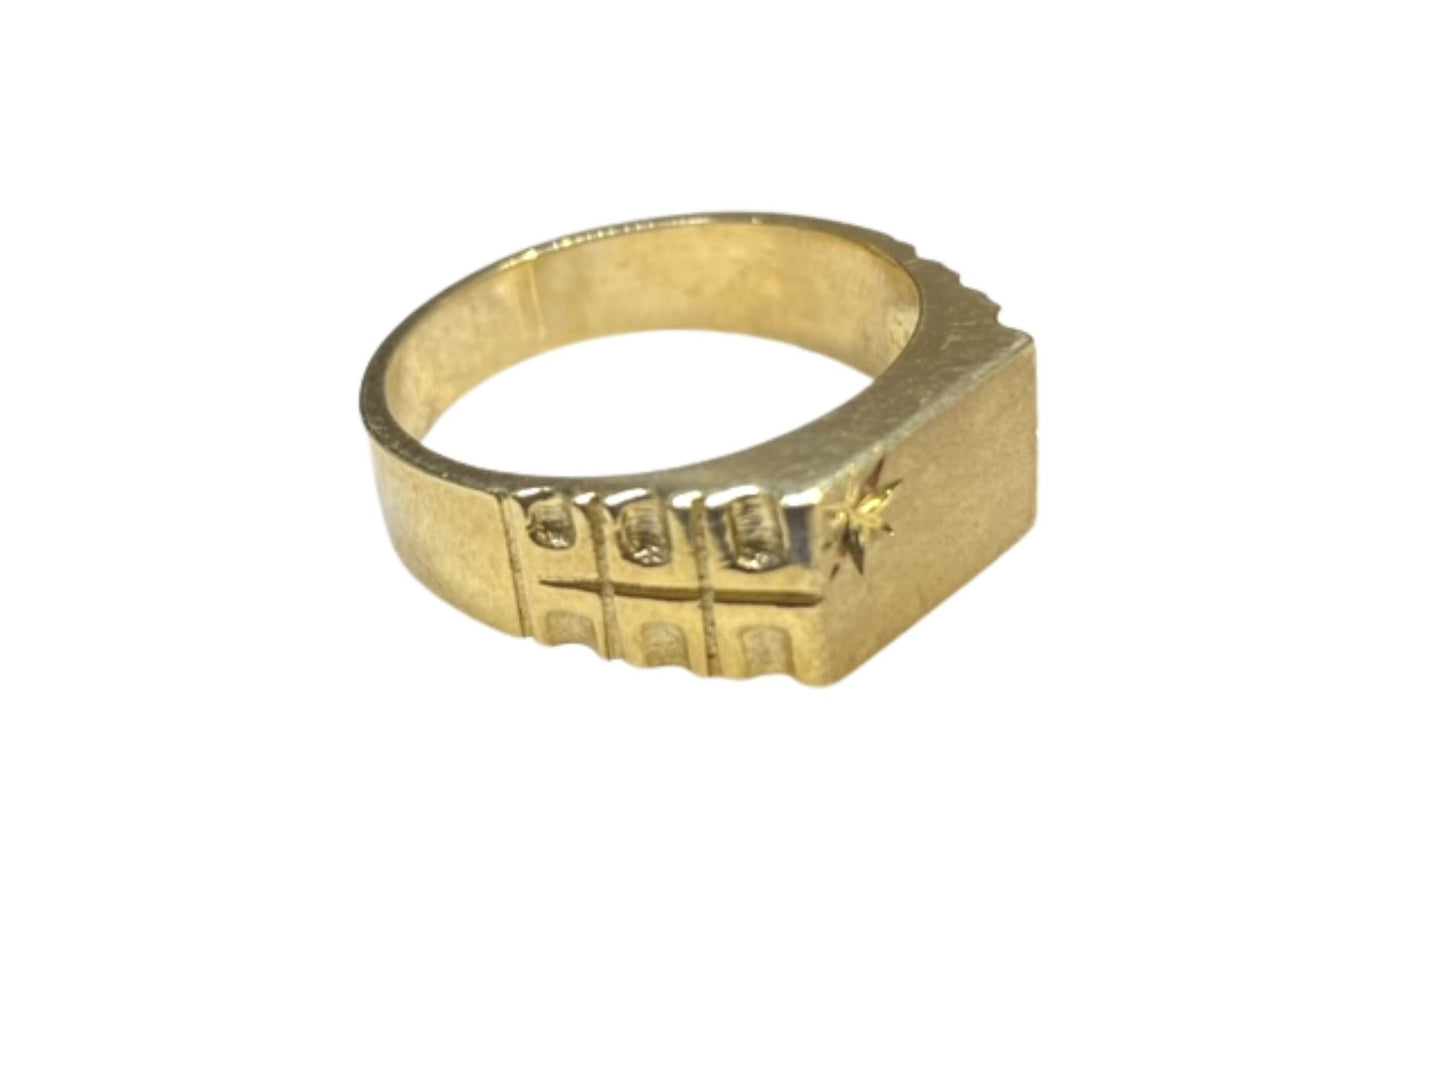 10k Yellow gold Star Design Men's Ring